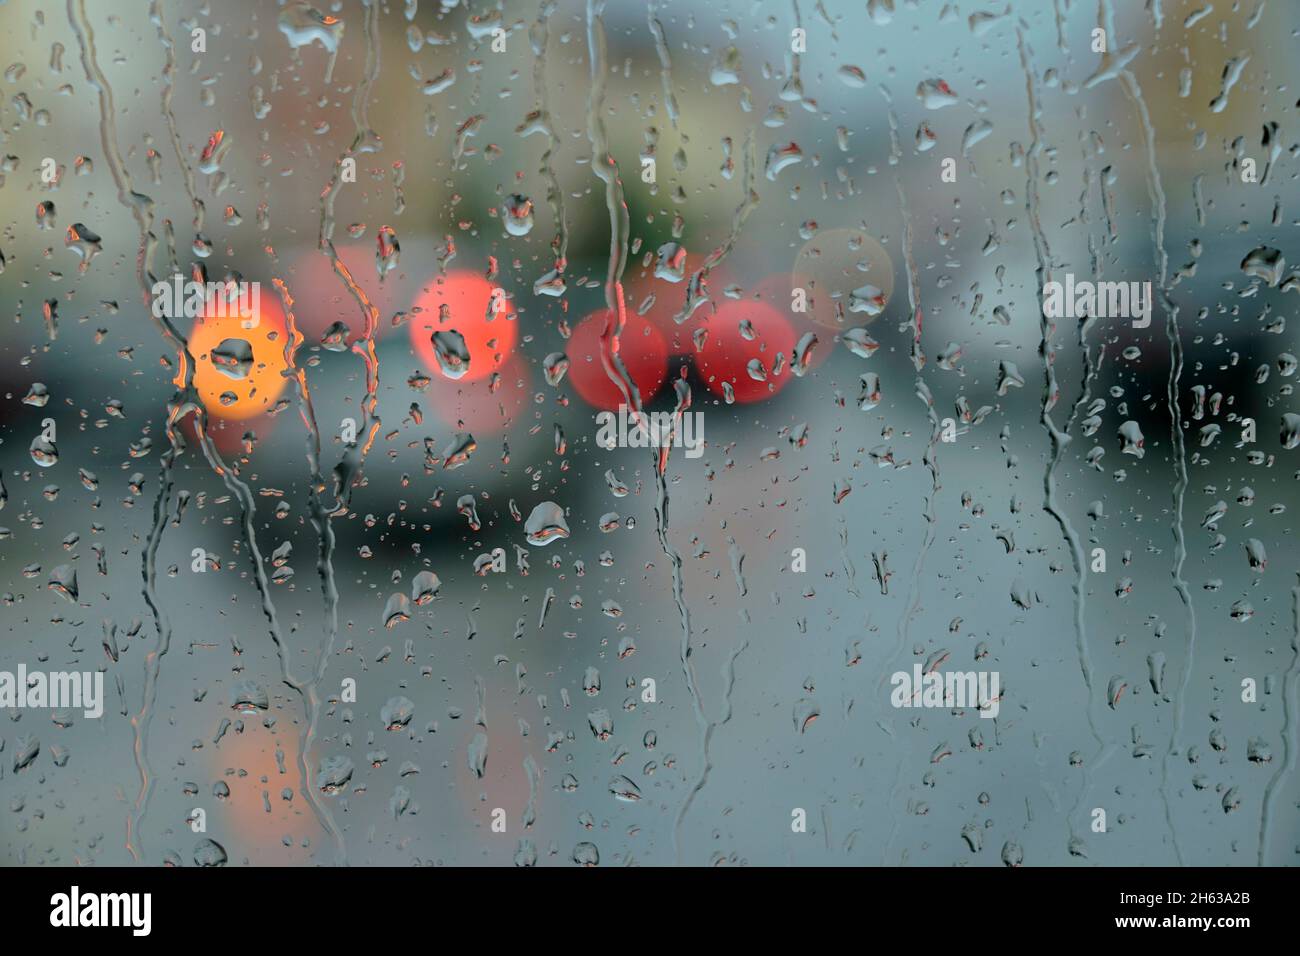 germany,bavaria,upper bavaria,neuötting,rainy weather,window pane,raindrops,traffic,town square,unclear Stock Photo